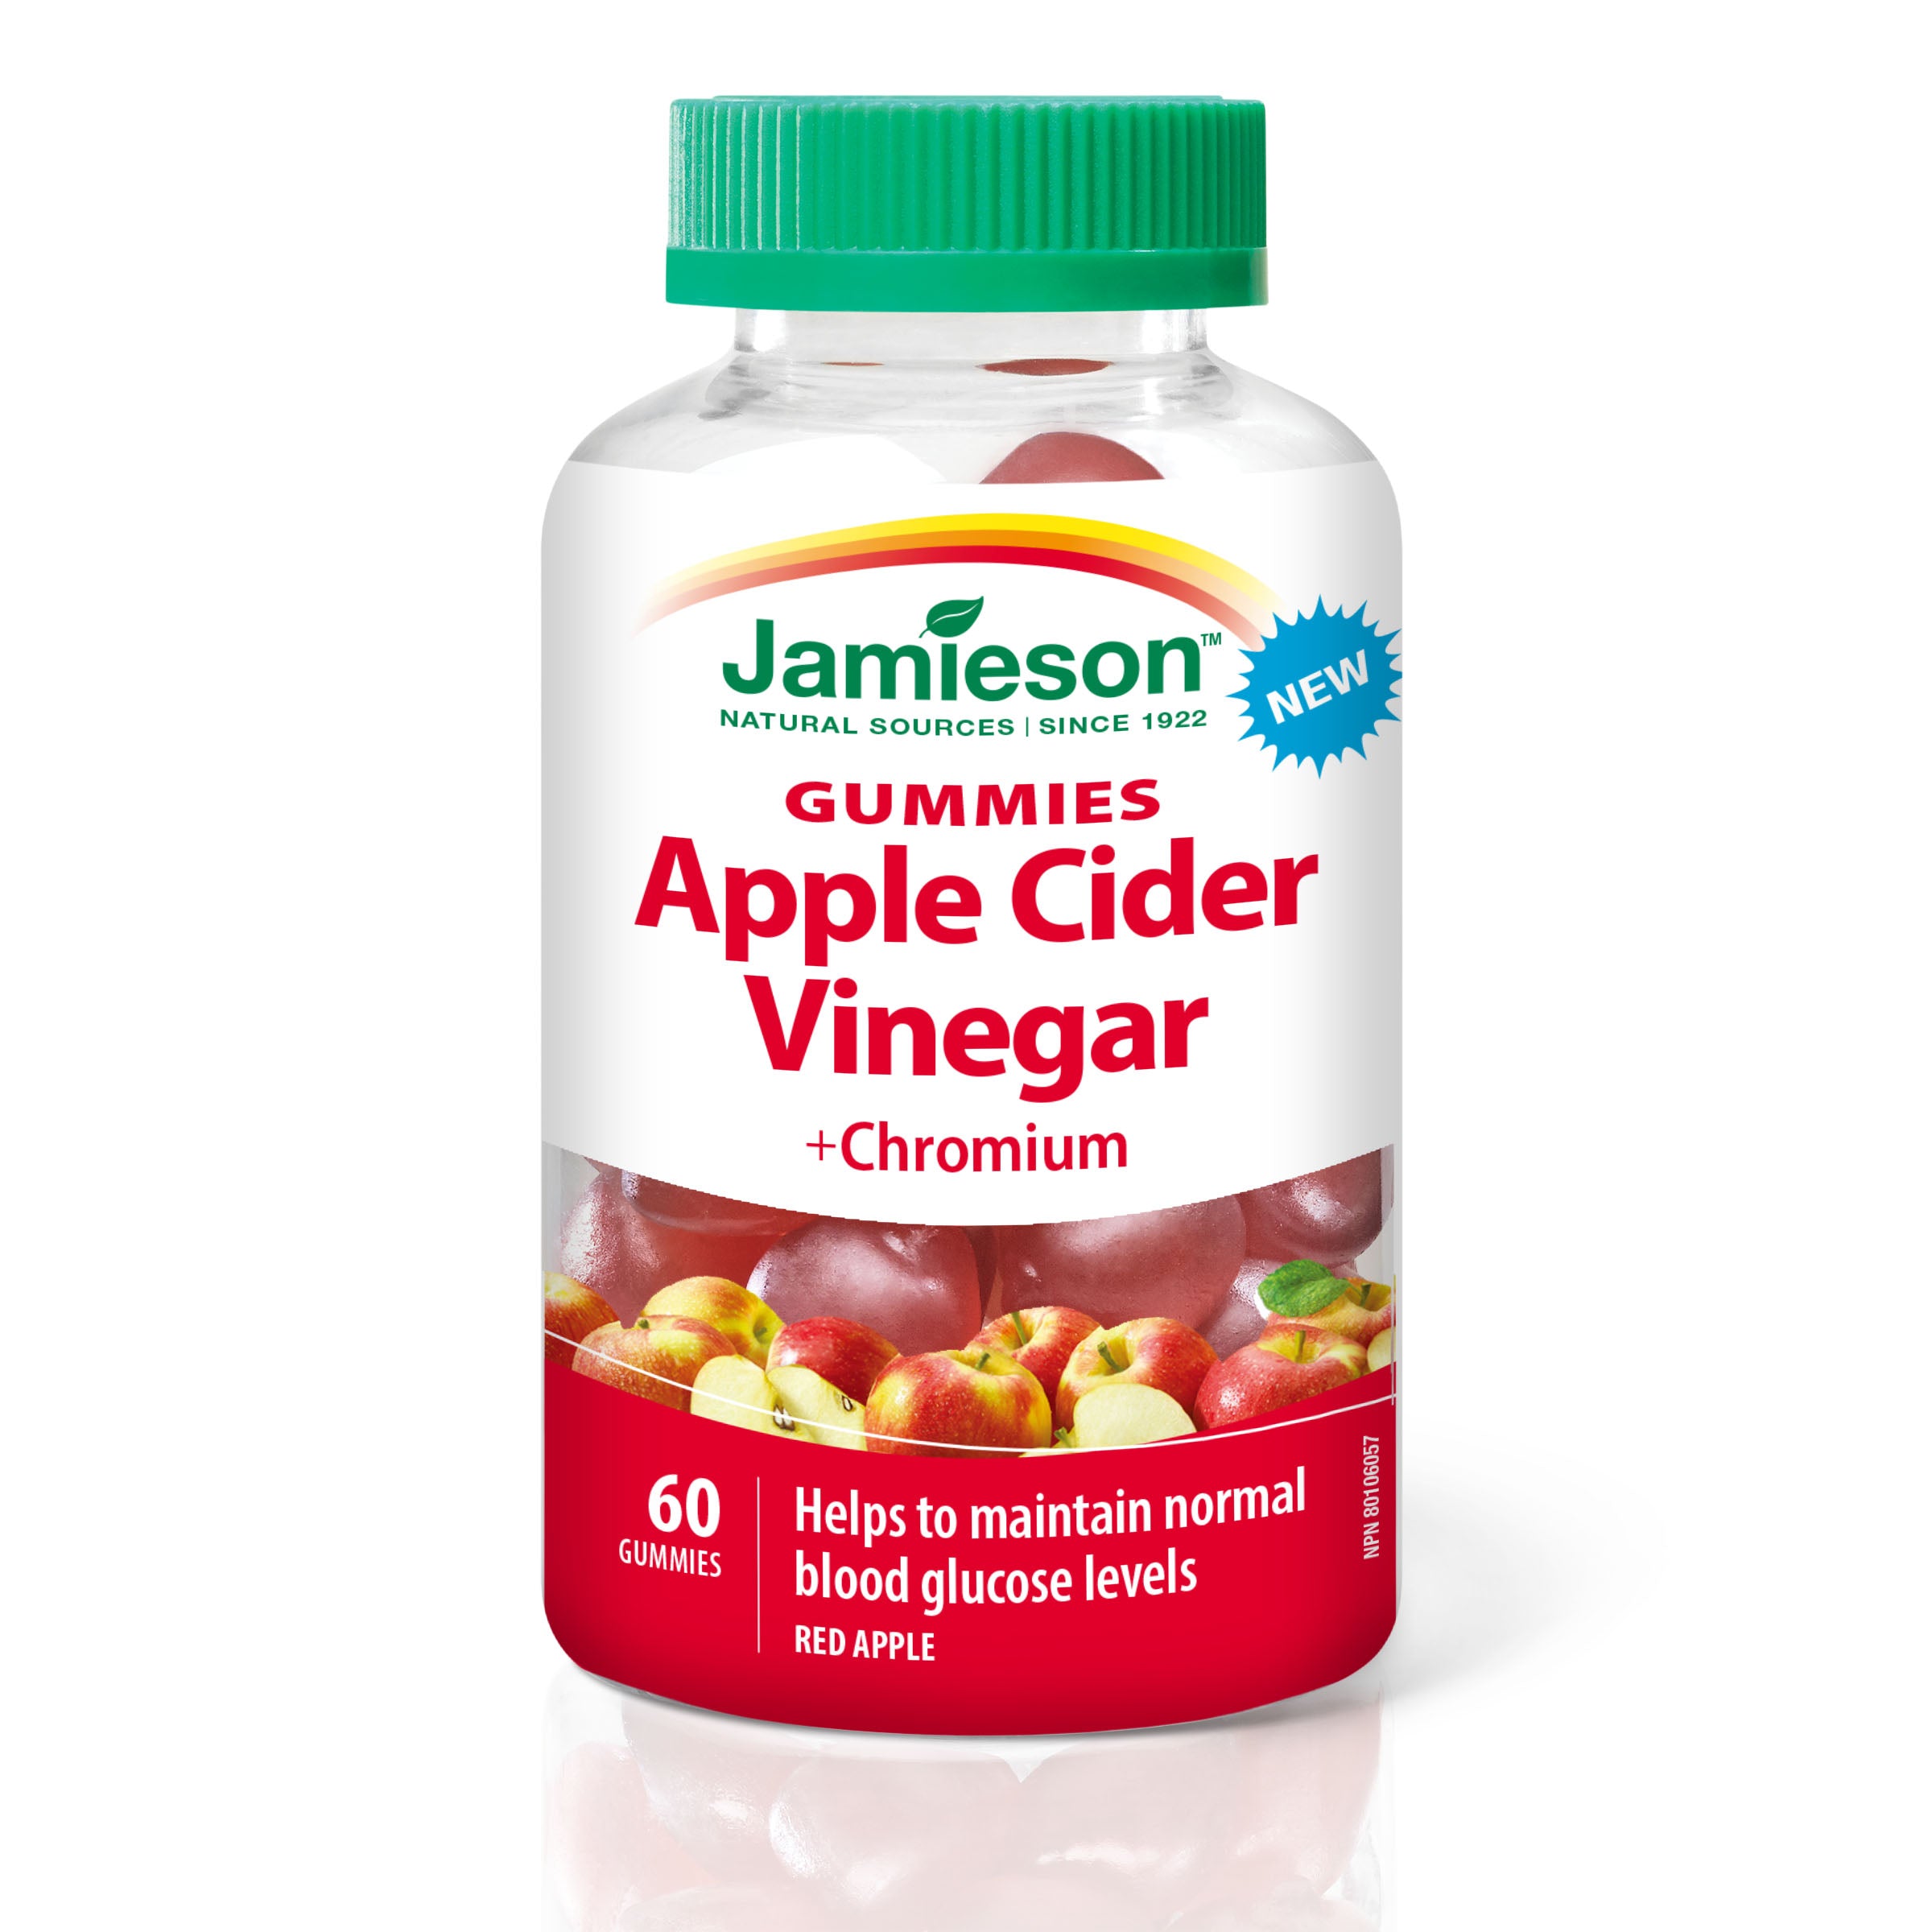 Pomme vinaigre – Jamieson Vitamins